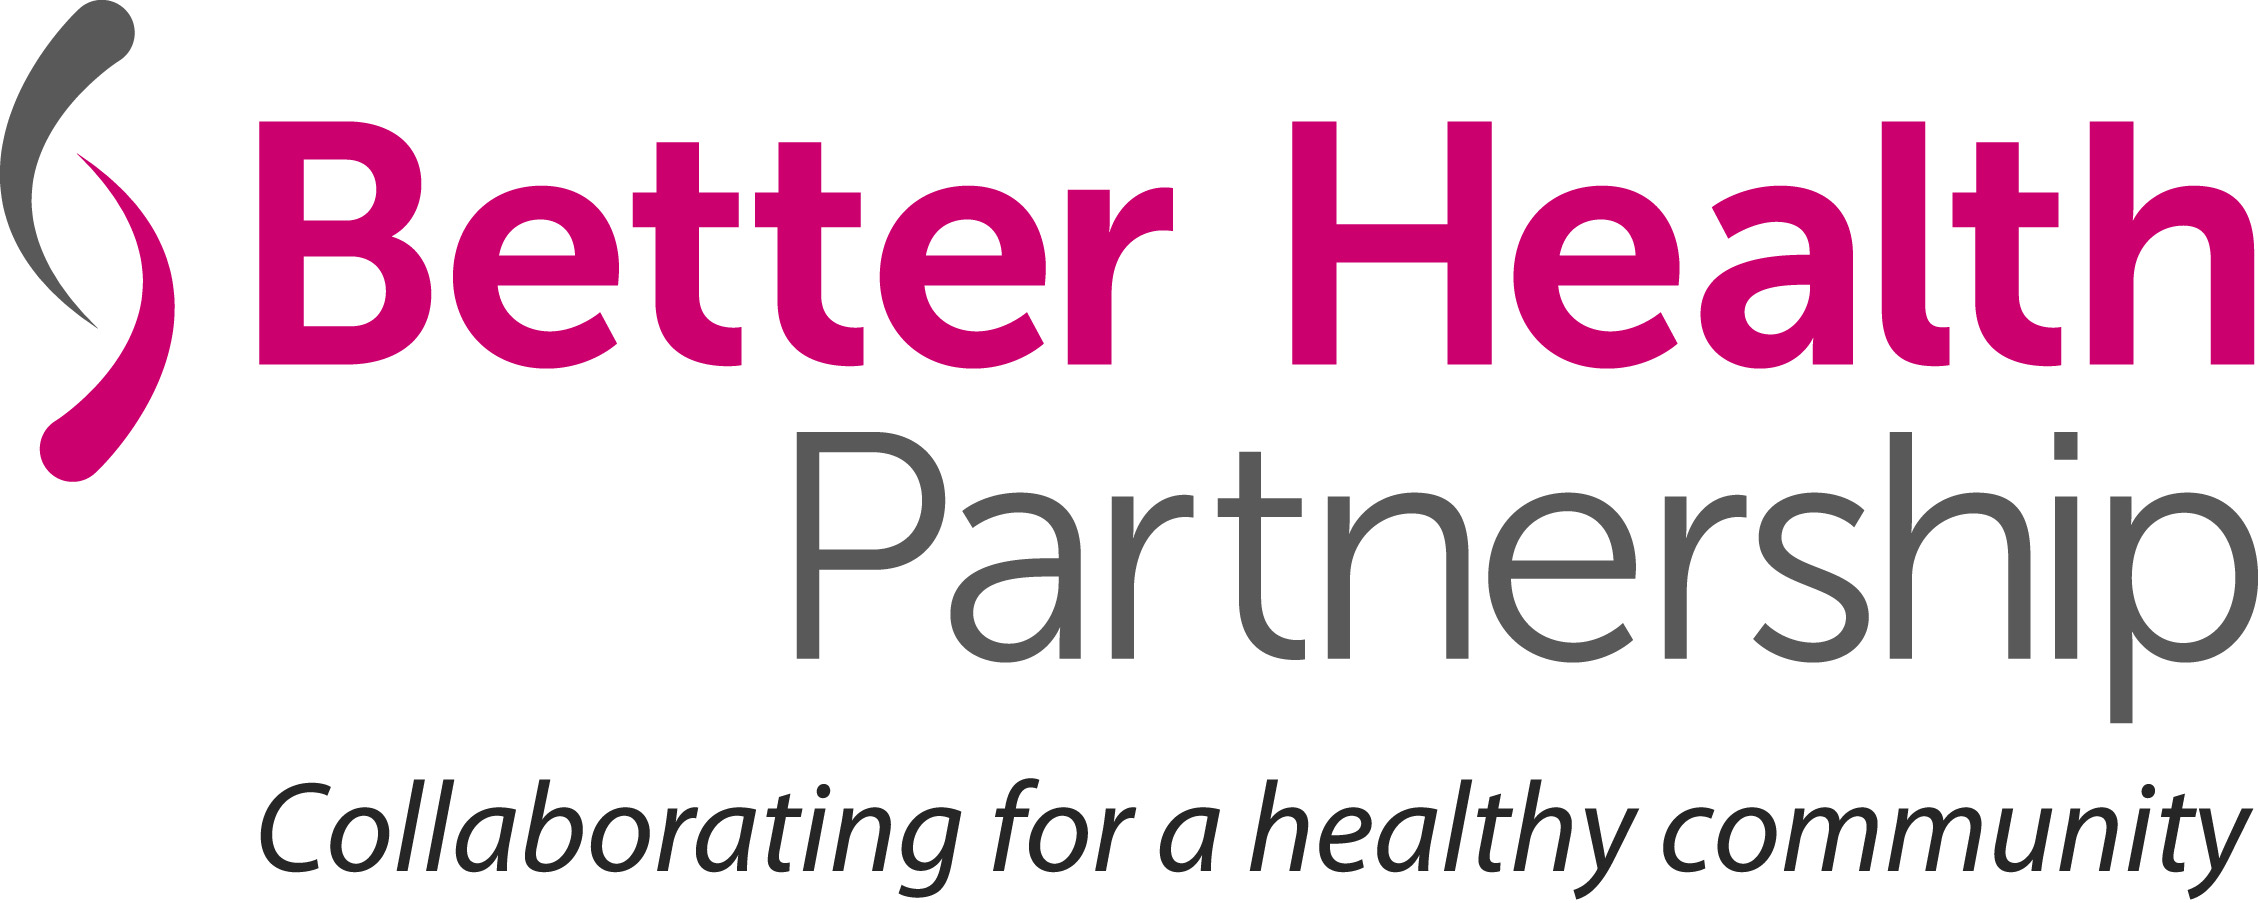 Better Health Partnership Logo